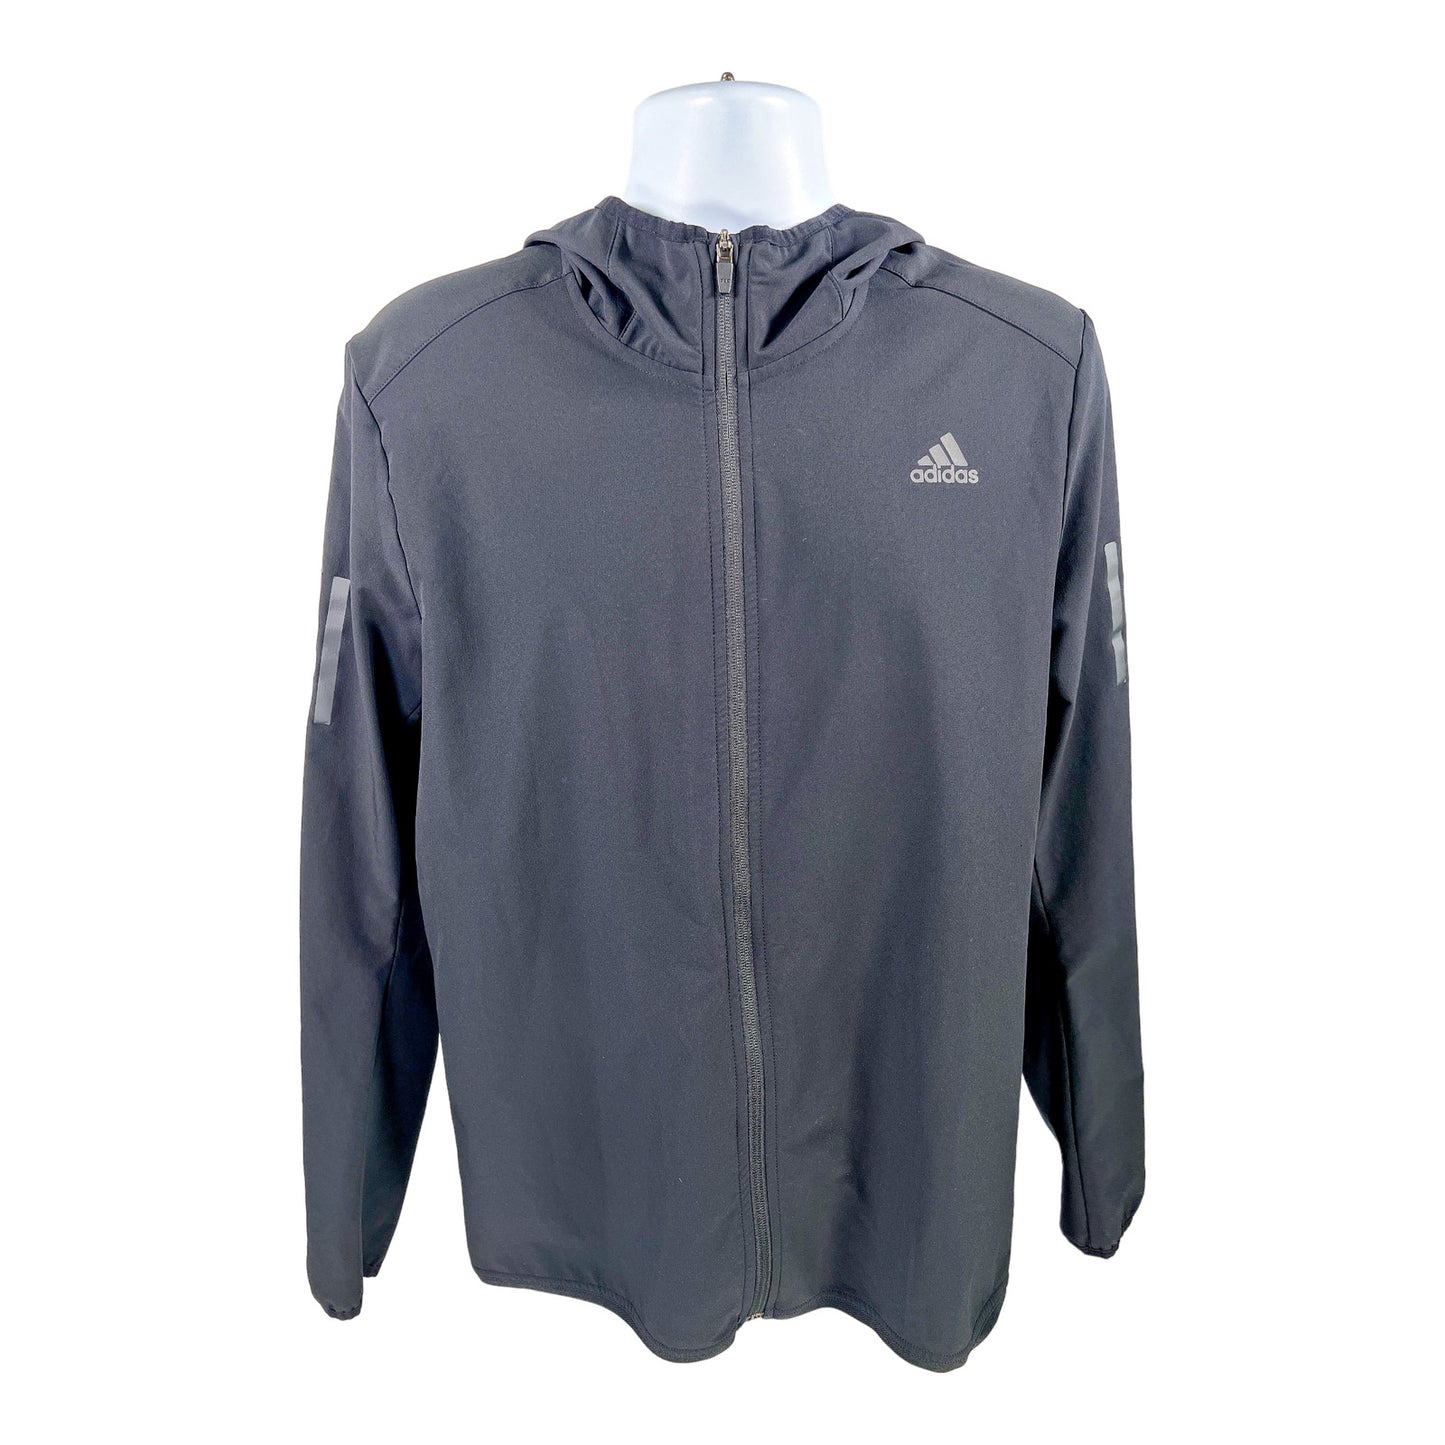 Adidas Men’s Black Long Sleeve Full Zip Running Windbreaker Jacket - M